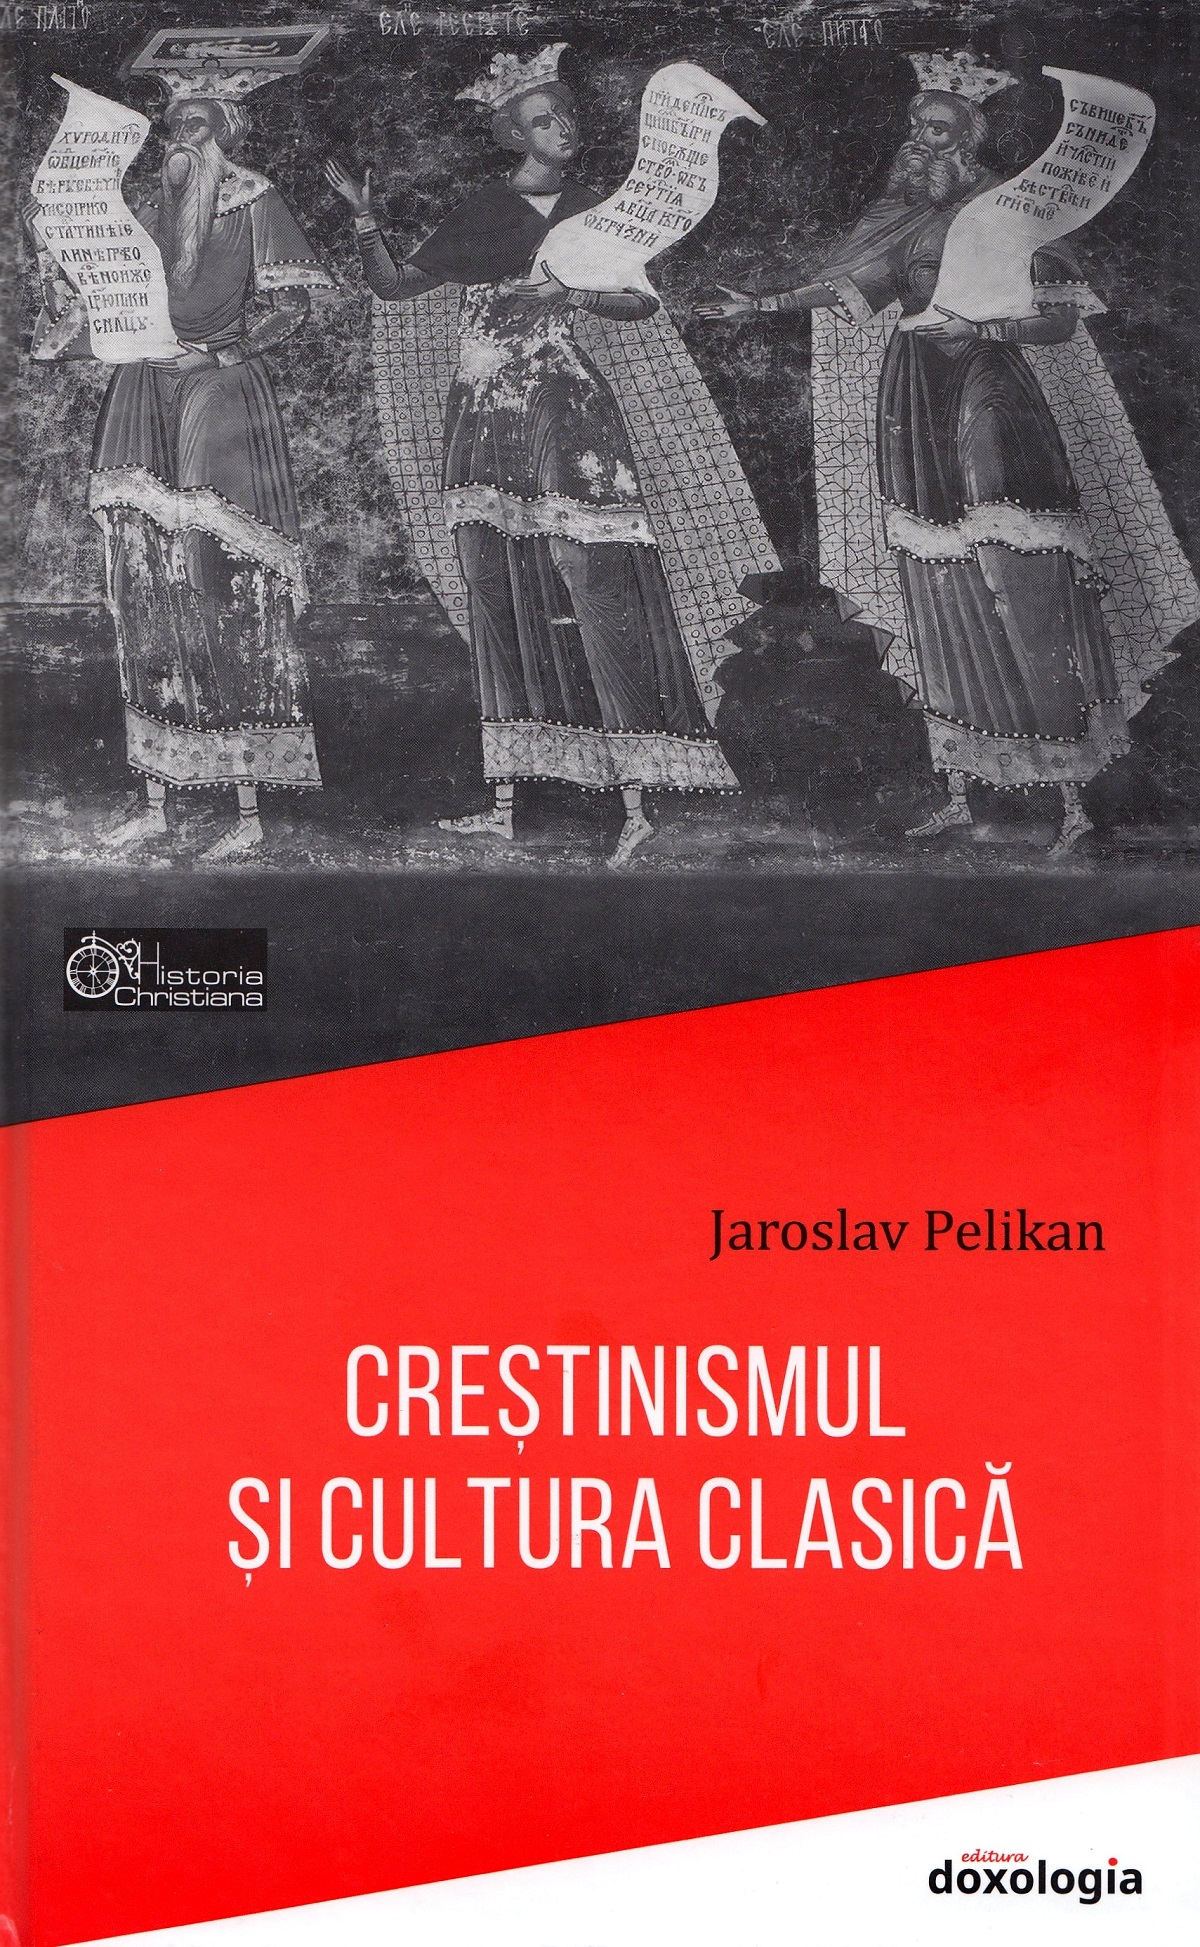 Crestinismul si cultura clasica - Jaroslav Pelikan